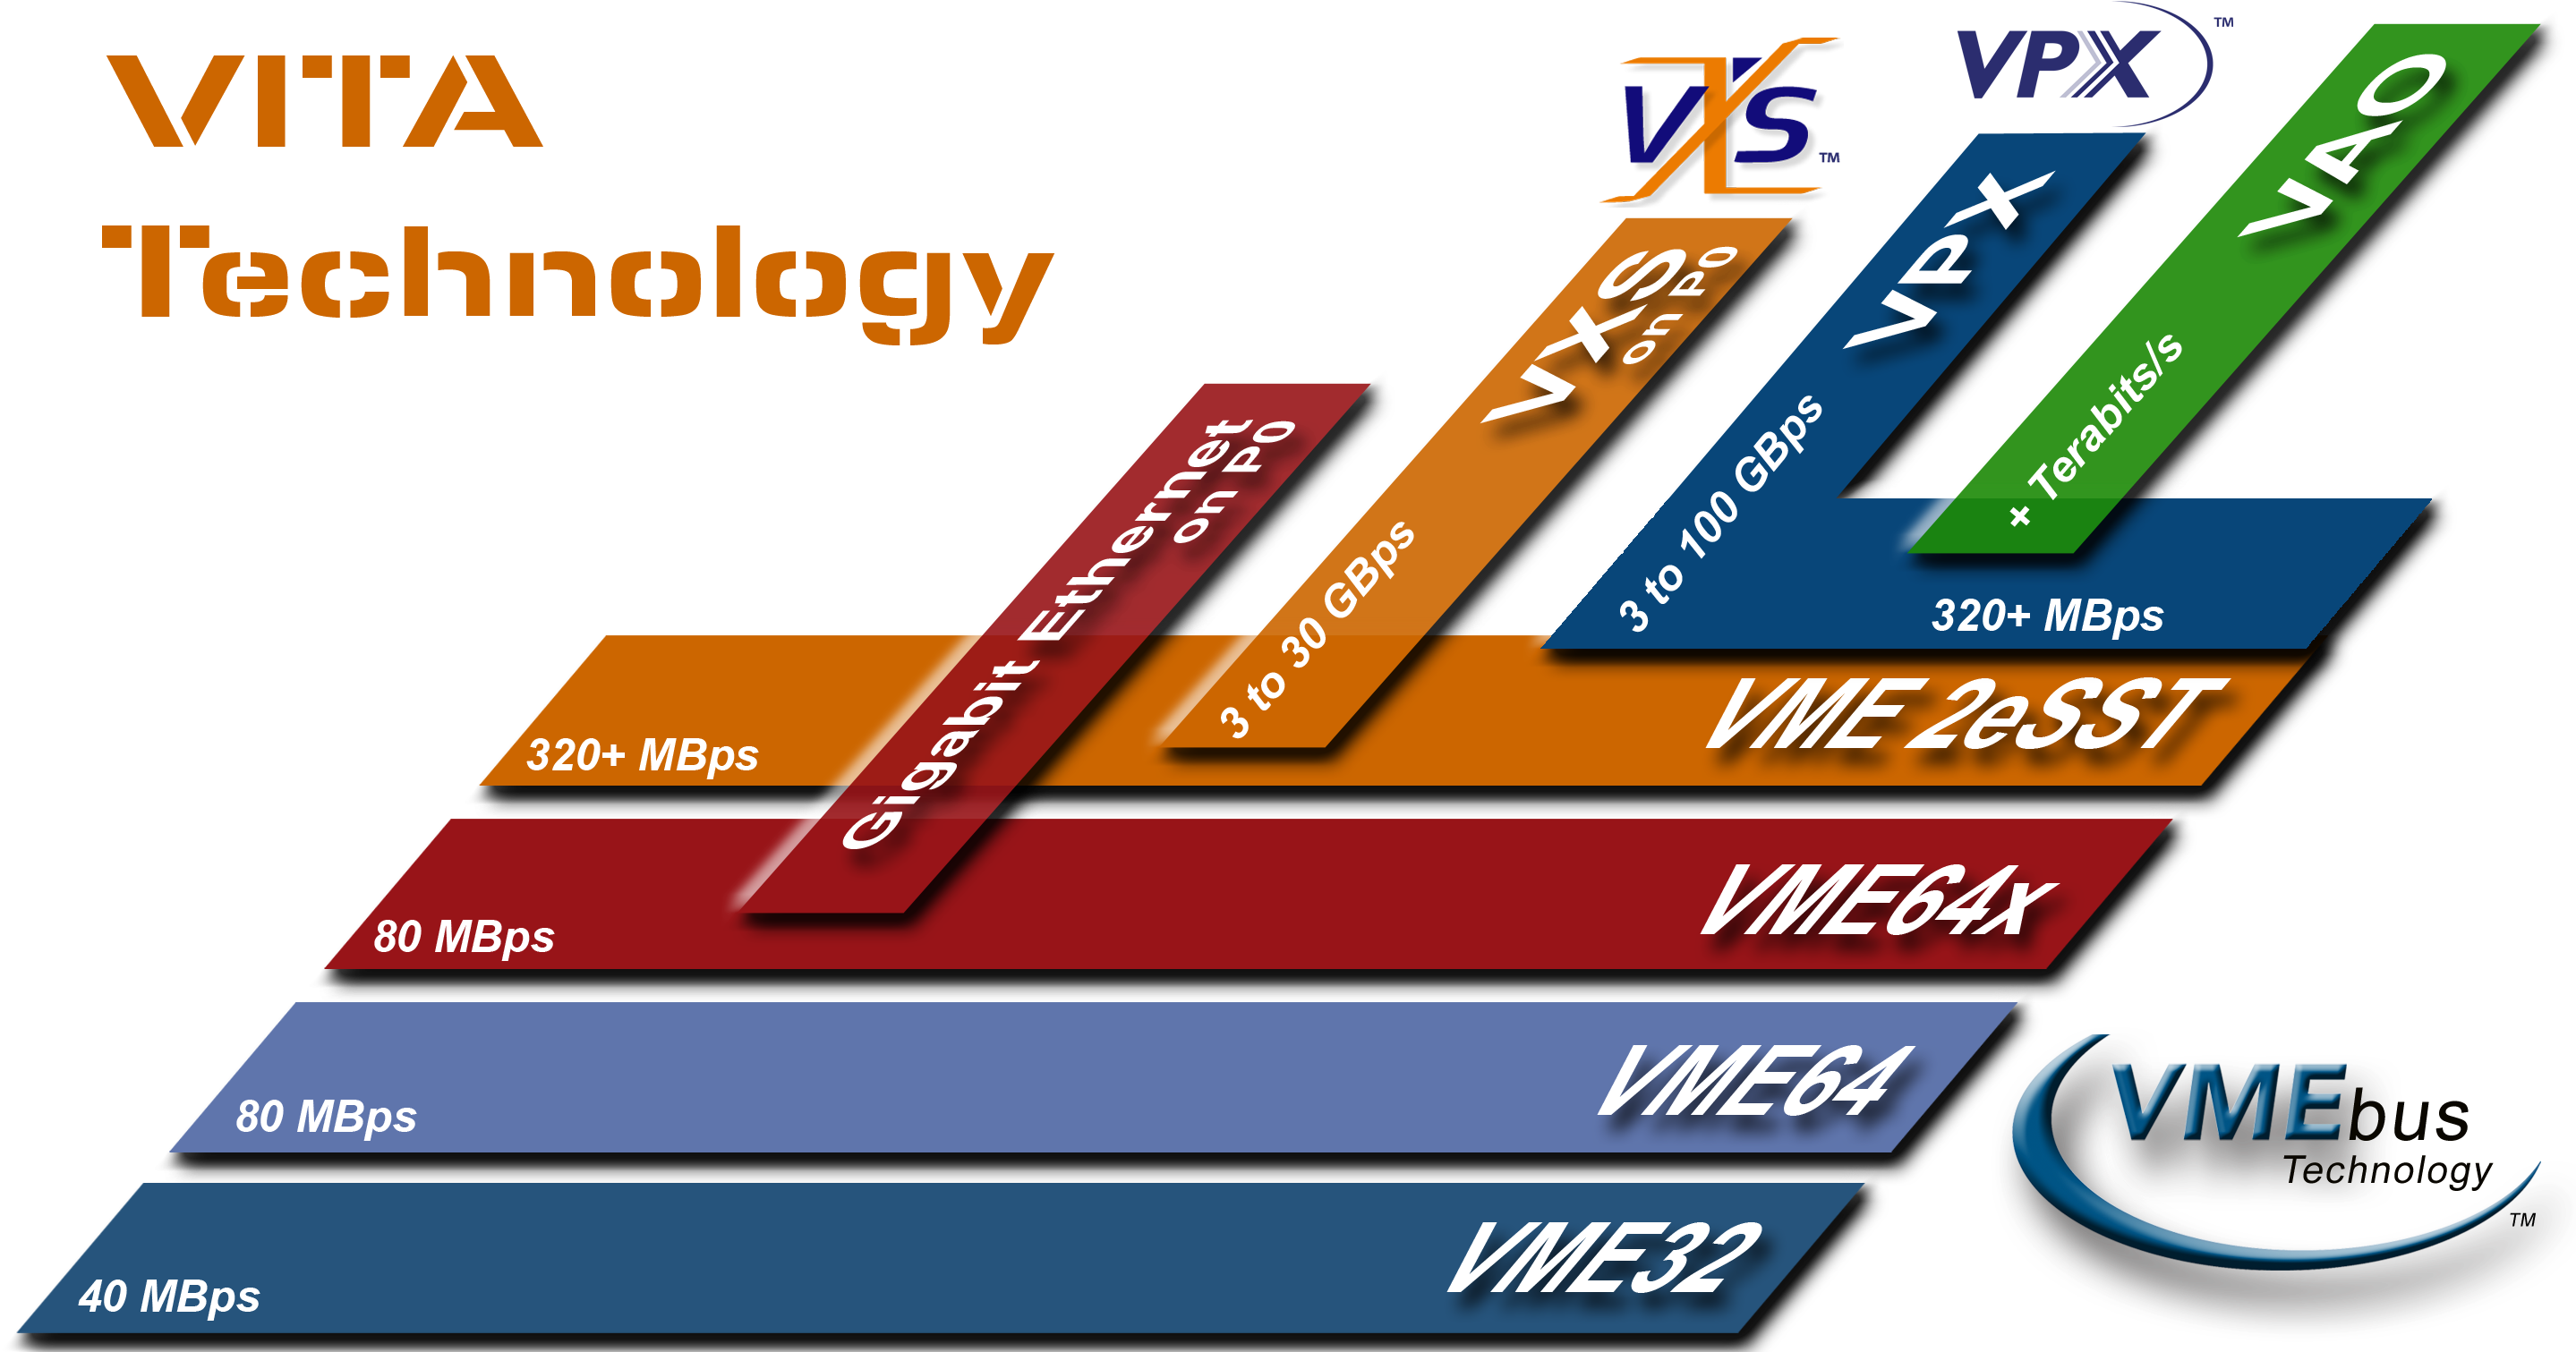 Vita Roadmap - Roadmap For Technology (2877x1551)